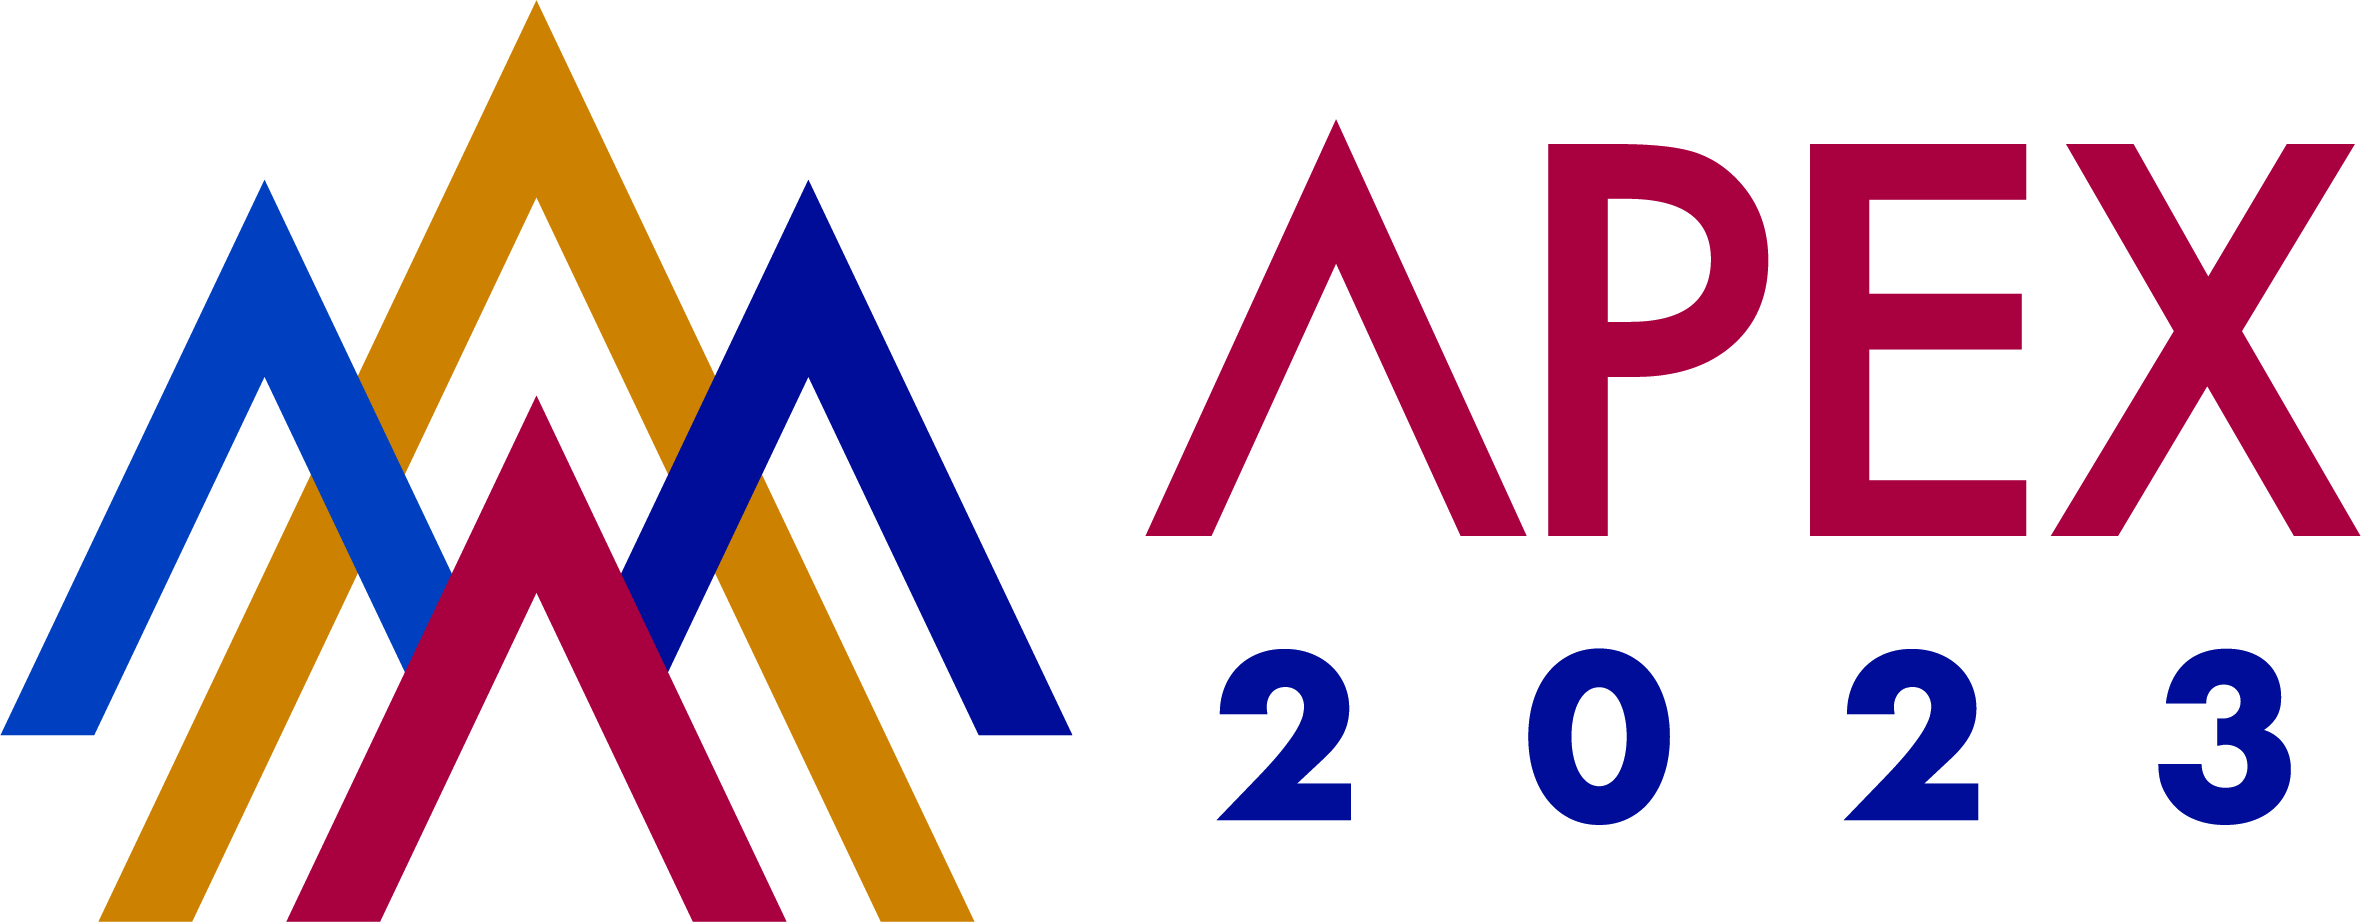 APEX conference 'mountain' logo